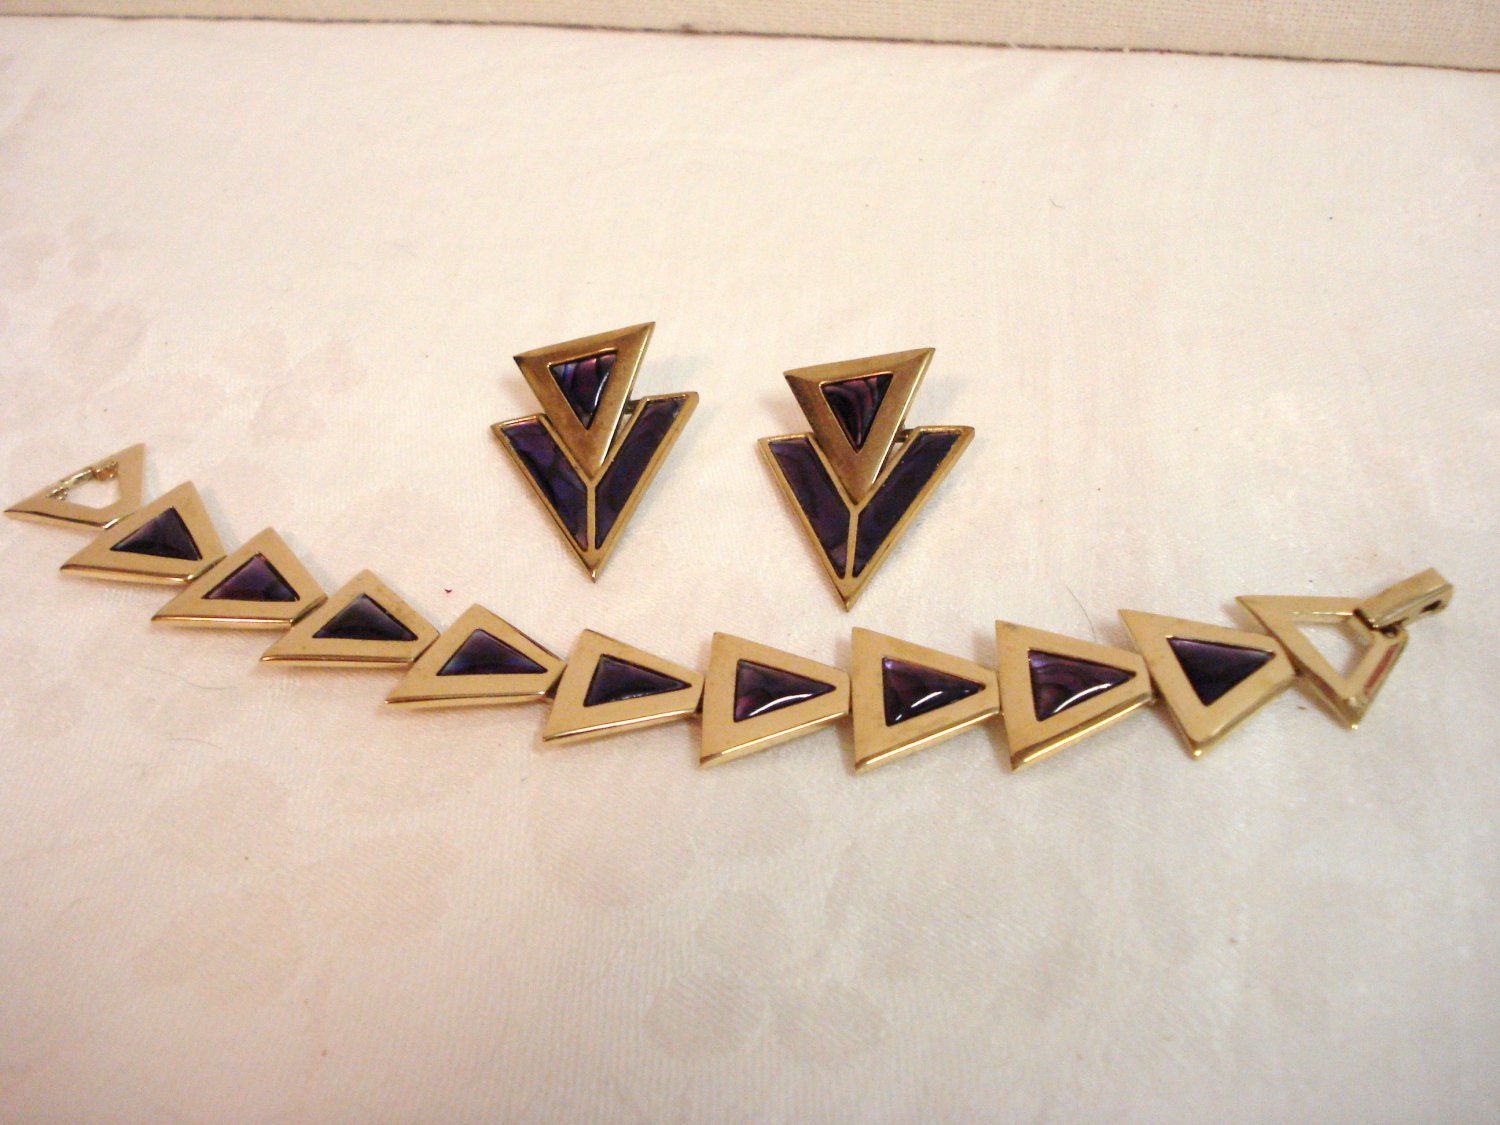 Butler bracelet pierced earrings set triangles with irridescent cloisonne vintage ll3259